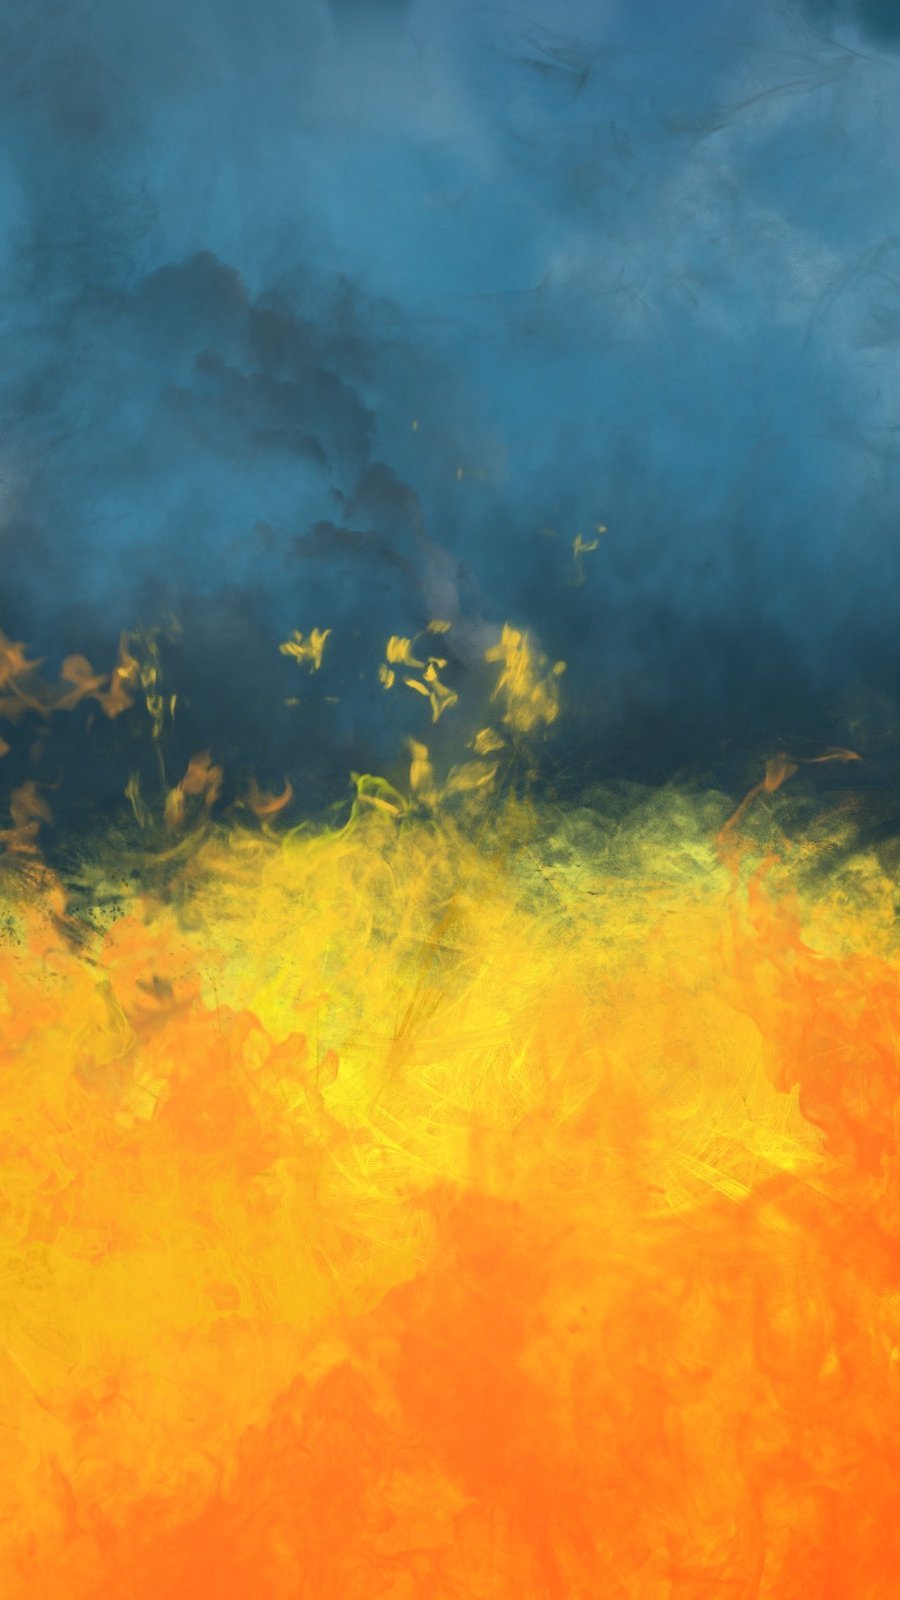 Fondos de pantalla Pintura de incendio abstracto Vertical